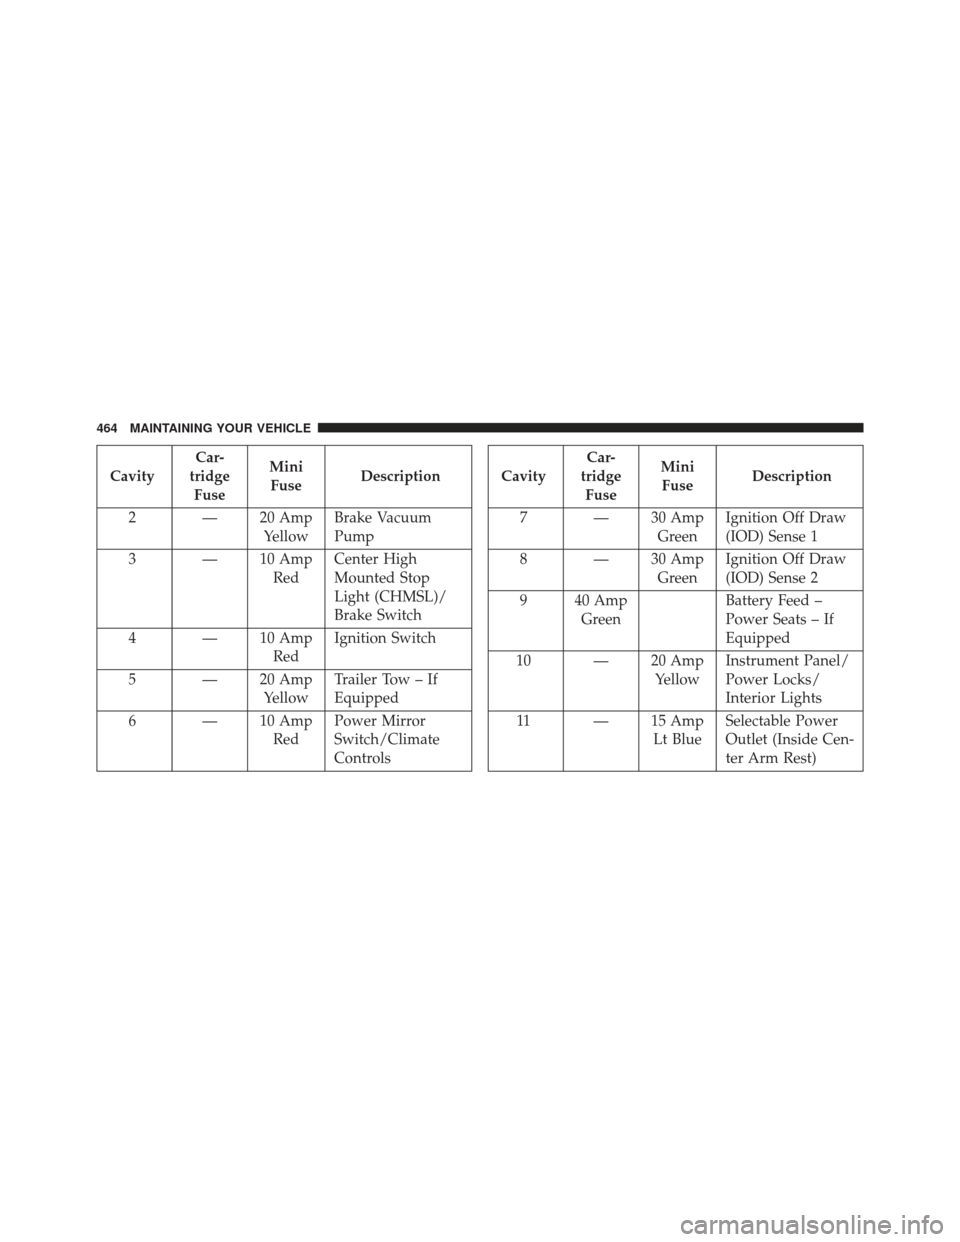 DODGE AVENGER 2014 2.G Owners Manual CavityCar-
tridge Fuse Mini
Fuse Description
2 — 20 Amp YellowBrake Vacuum
Pump
3 — 10 Amp RedCenter High
Mounted Stop
Light (CHMSL)/
Brake Switch
4 — 10 Amp RedIgnition Switch
5 — 20 Amp Yell